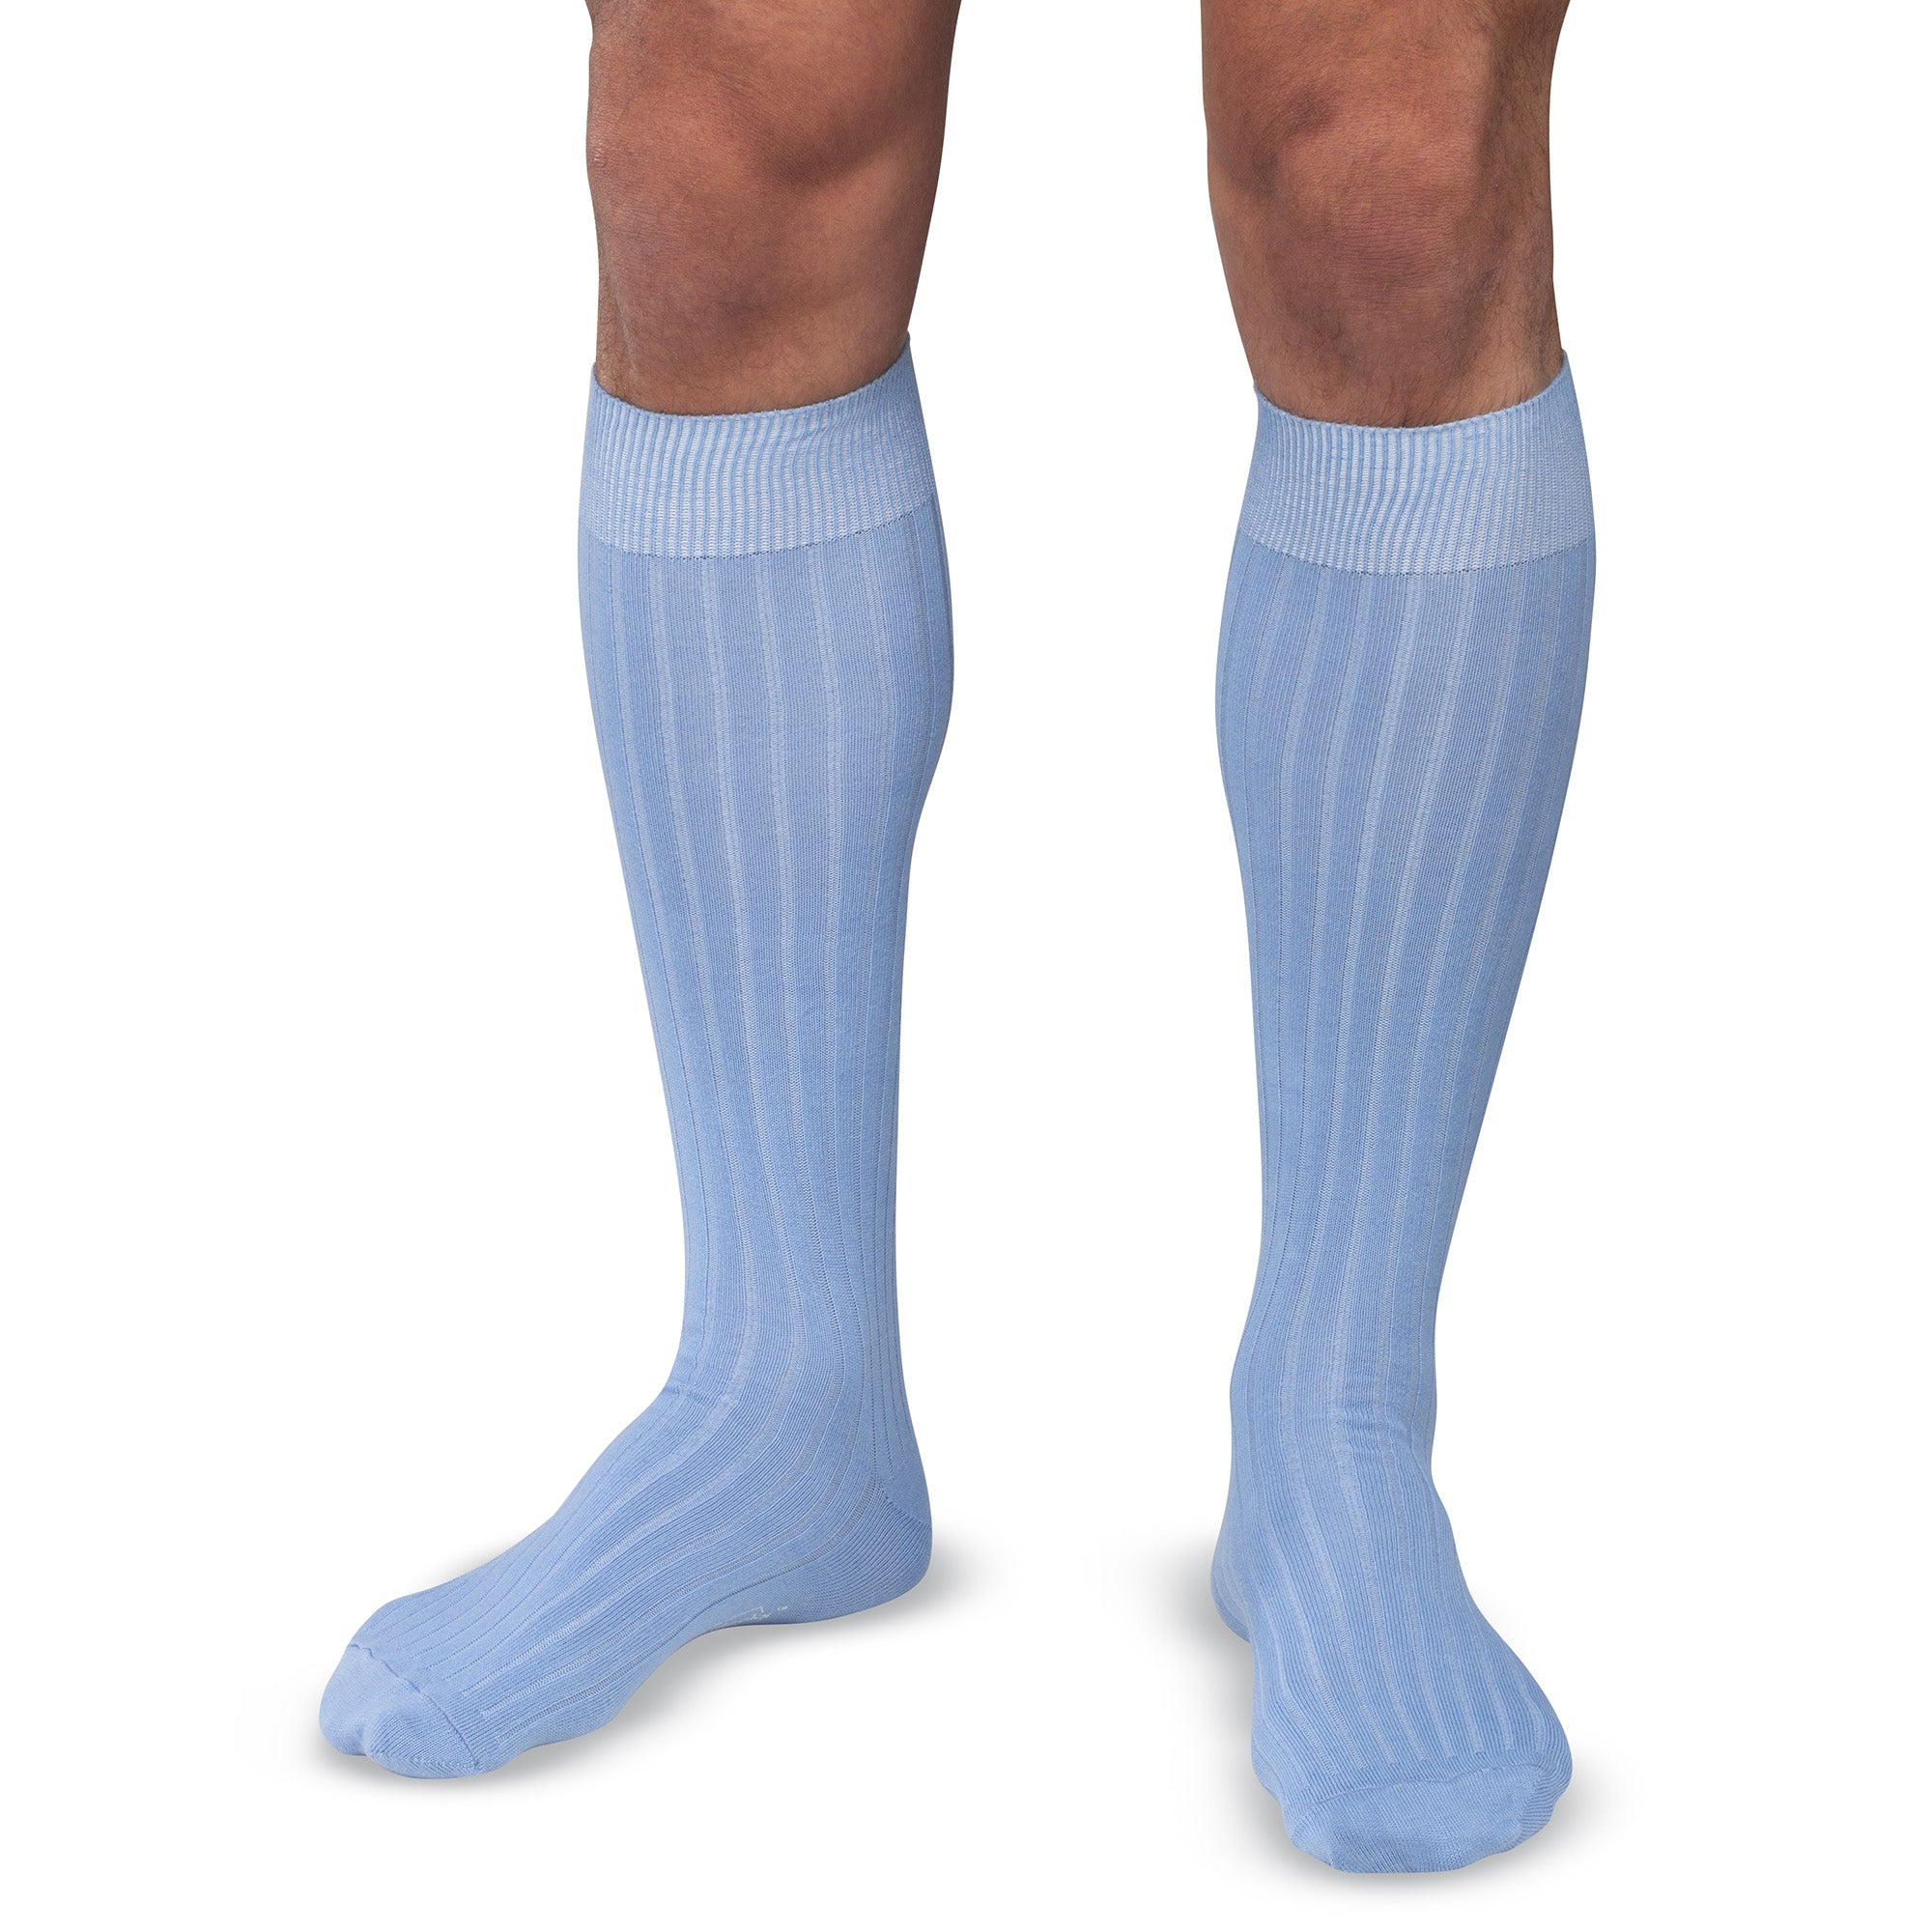 model wearing sky blue ribbed over the calf cotton dress socks for men